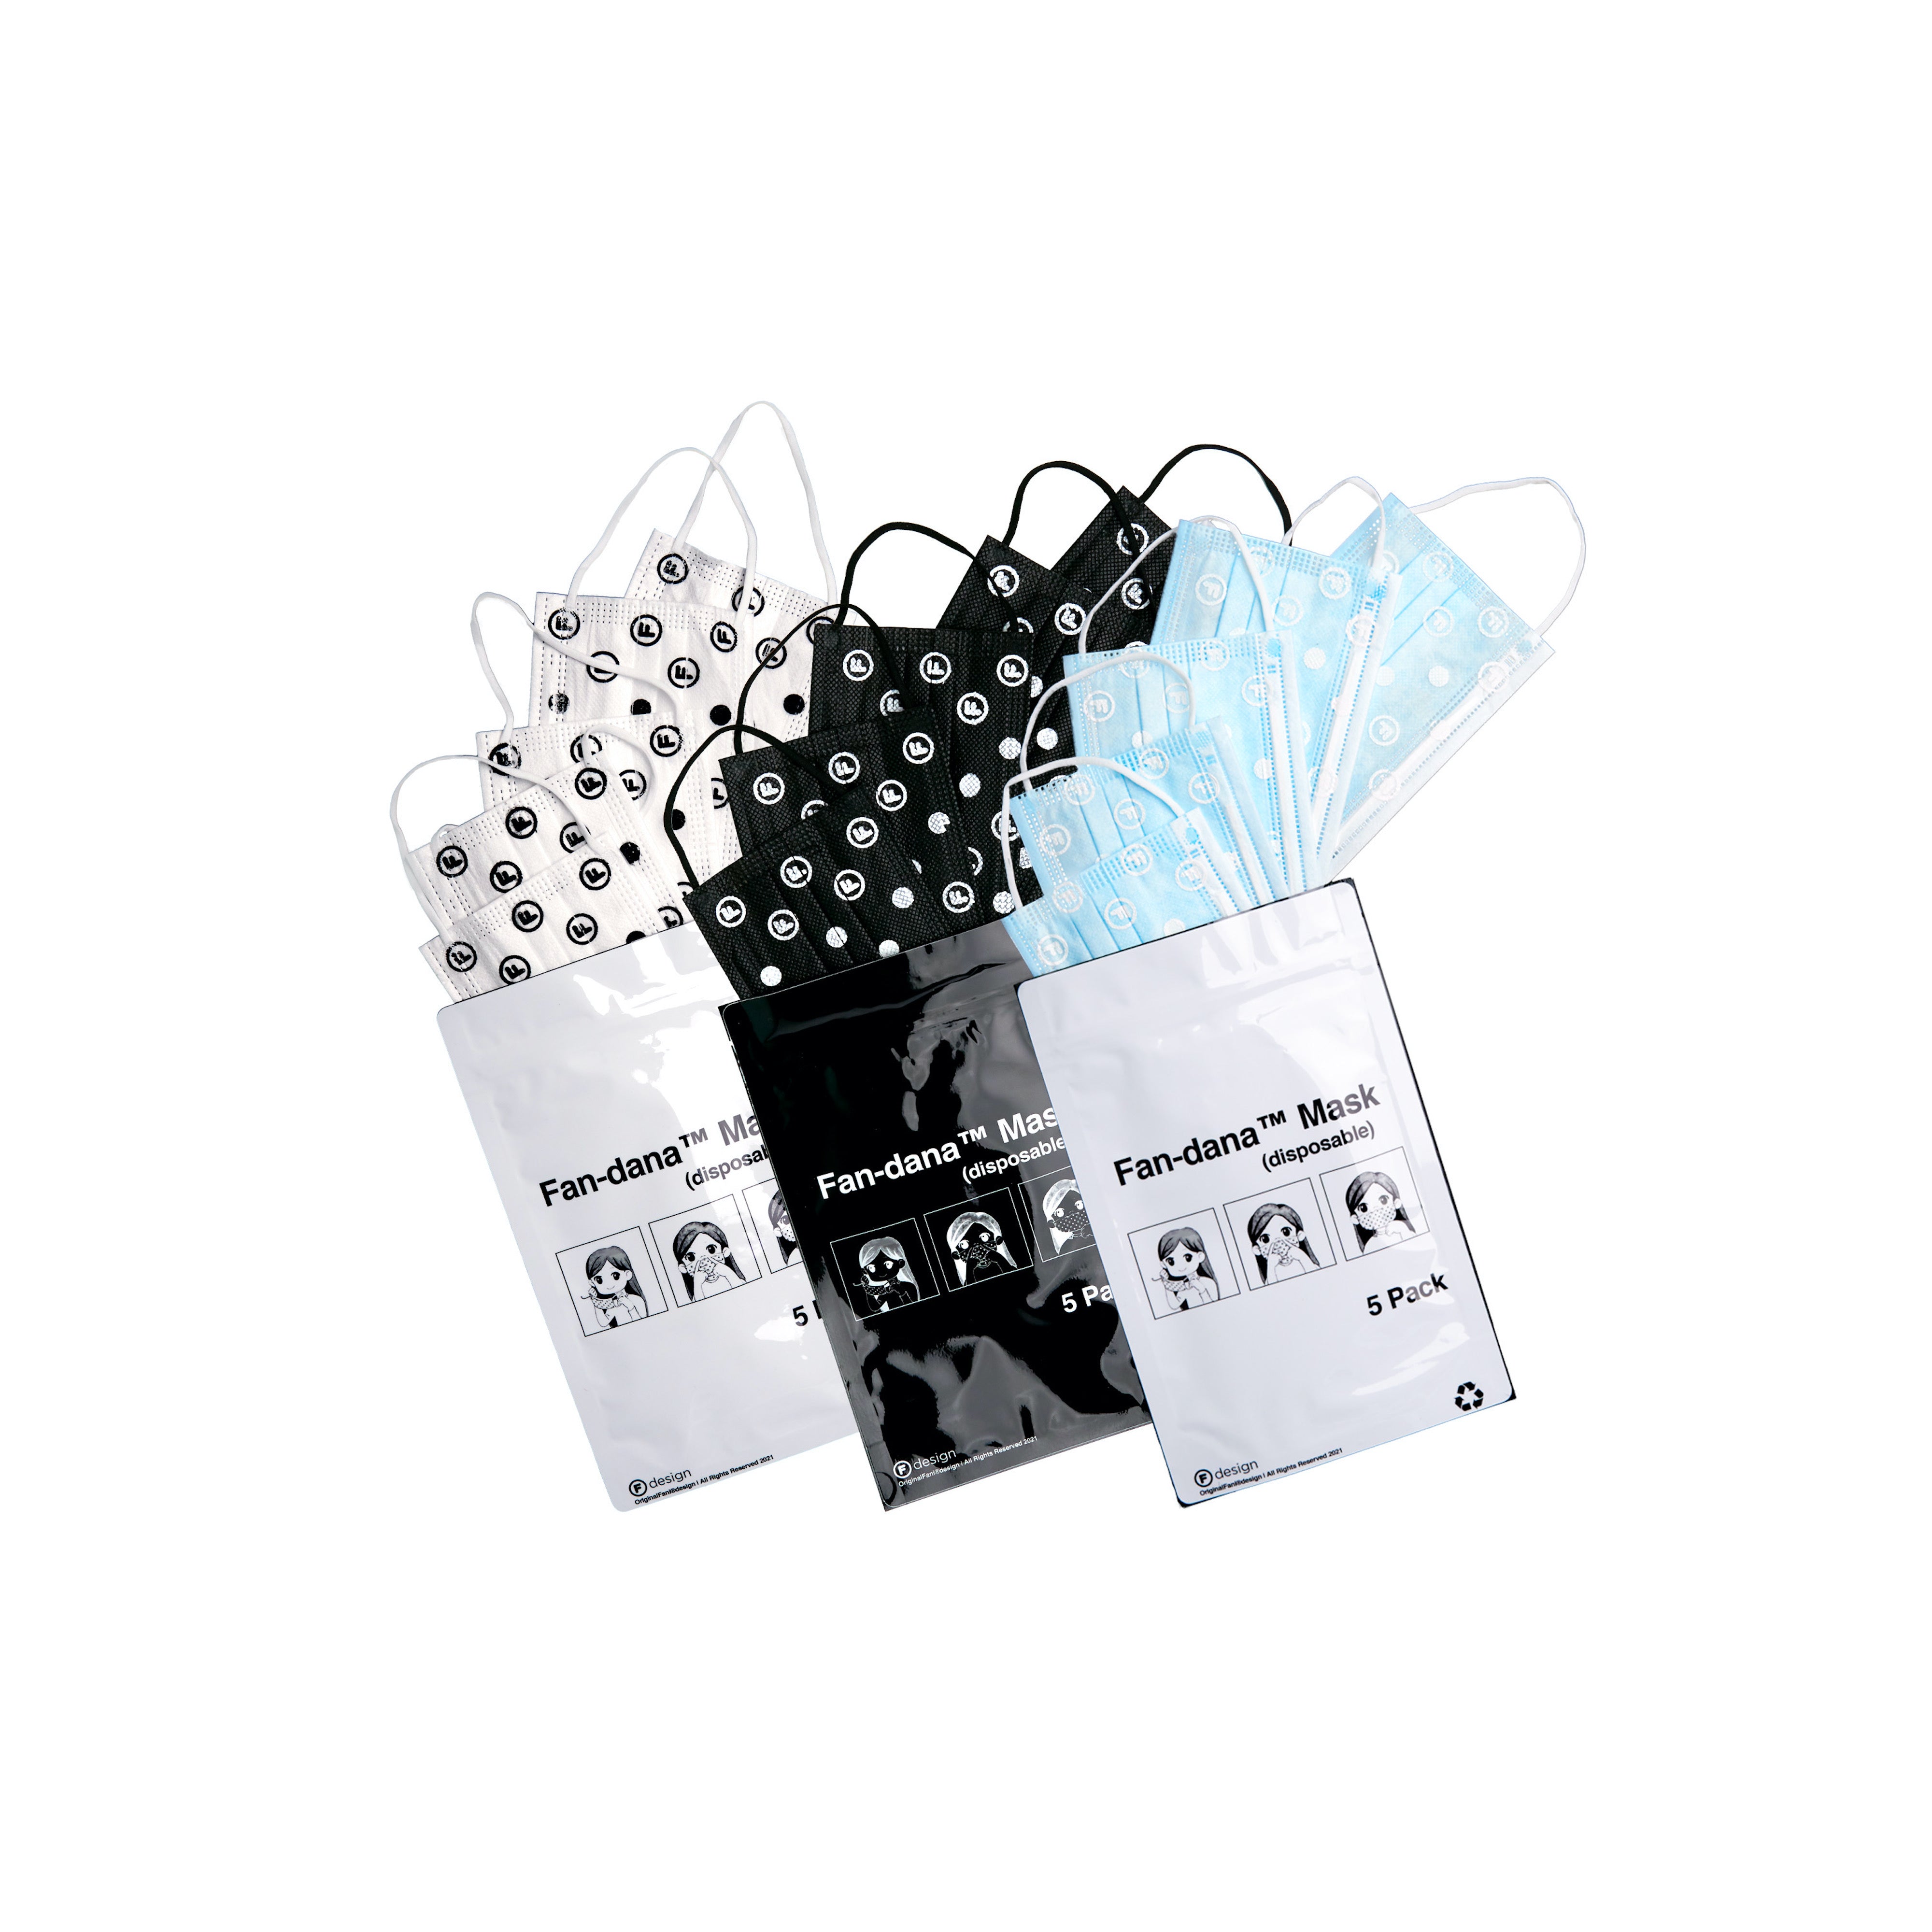 OriginalFani®design Fan-dana™️ Mask (disposable) 5 pack (White)